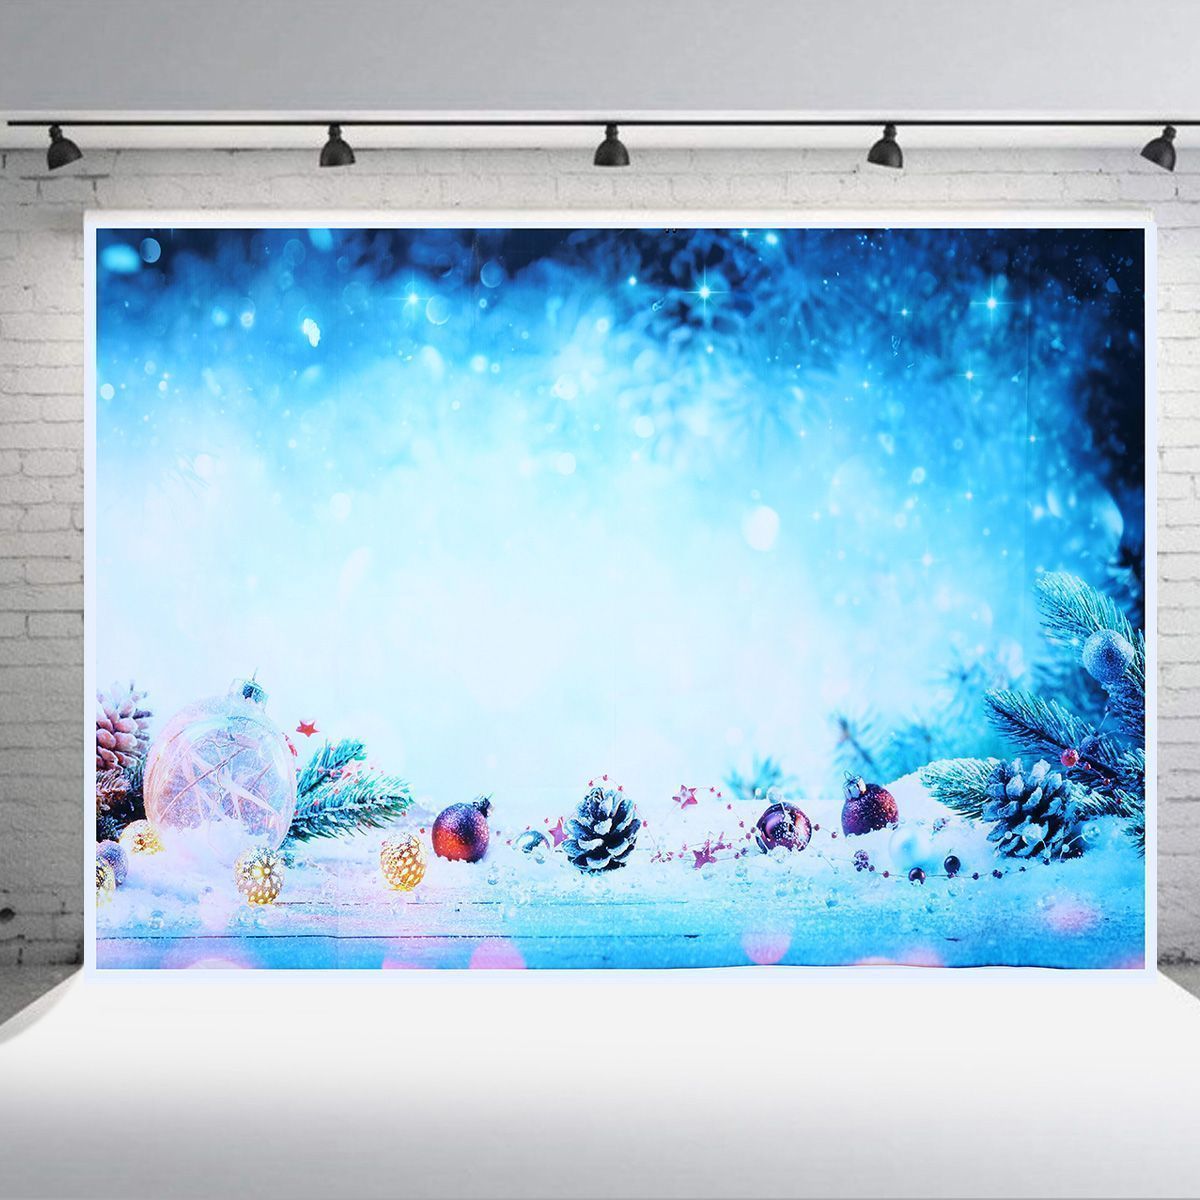 5x3FT-7x5FT-Dream-Snow-Blue-Scene-Photography-Backdrop-Background-Studio-Prop-1610110